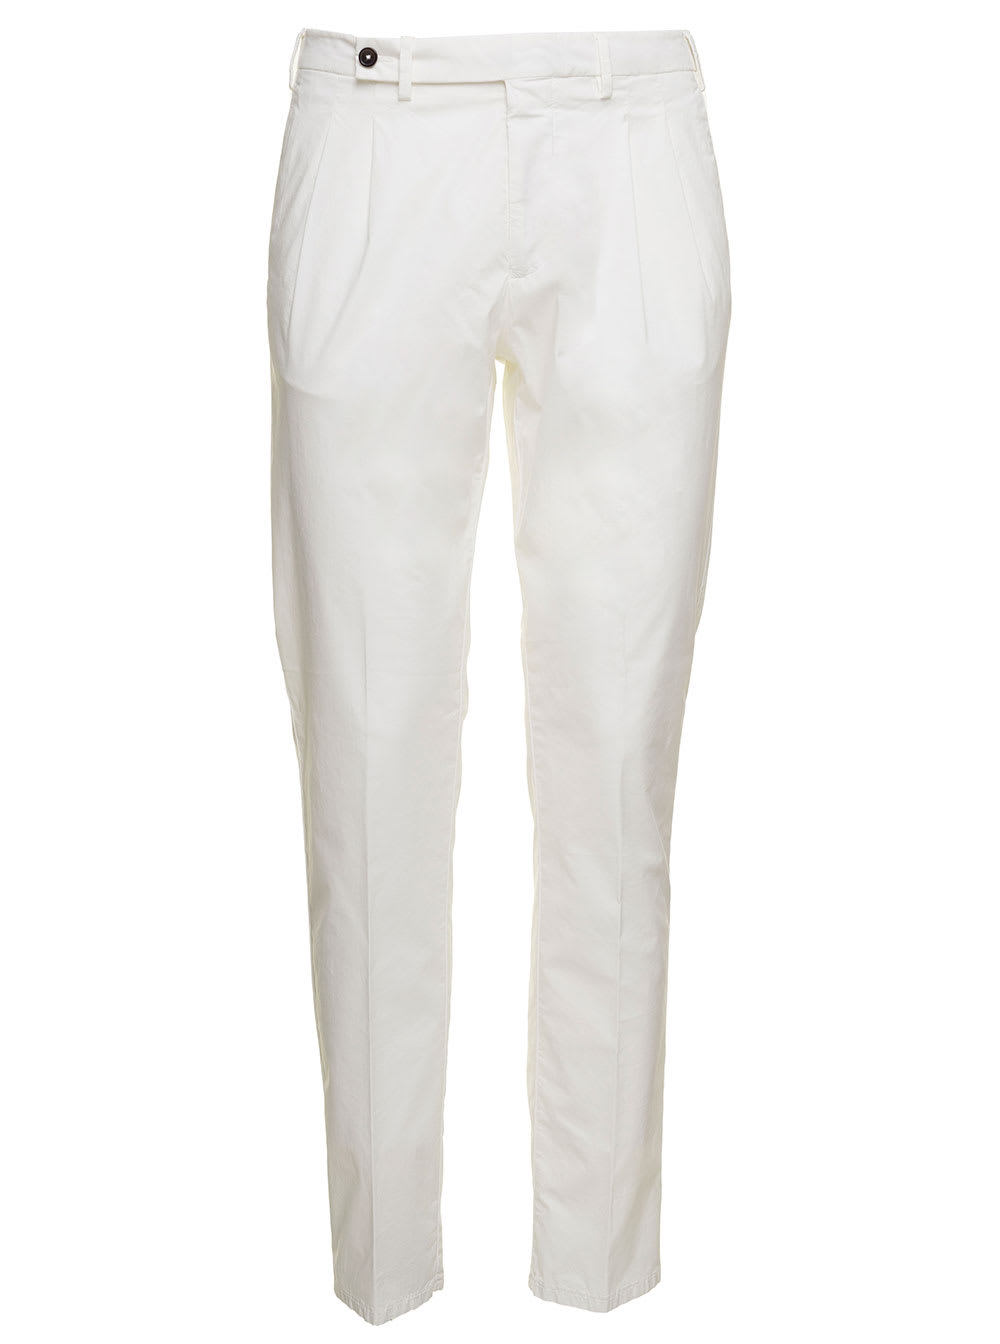 Berwich Mens White Tailored Cotton Trousers